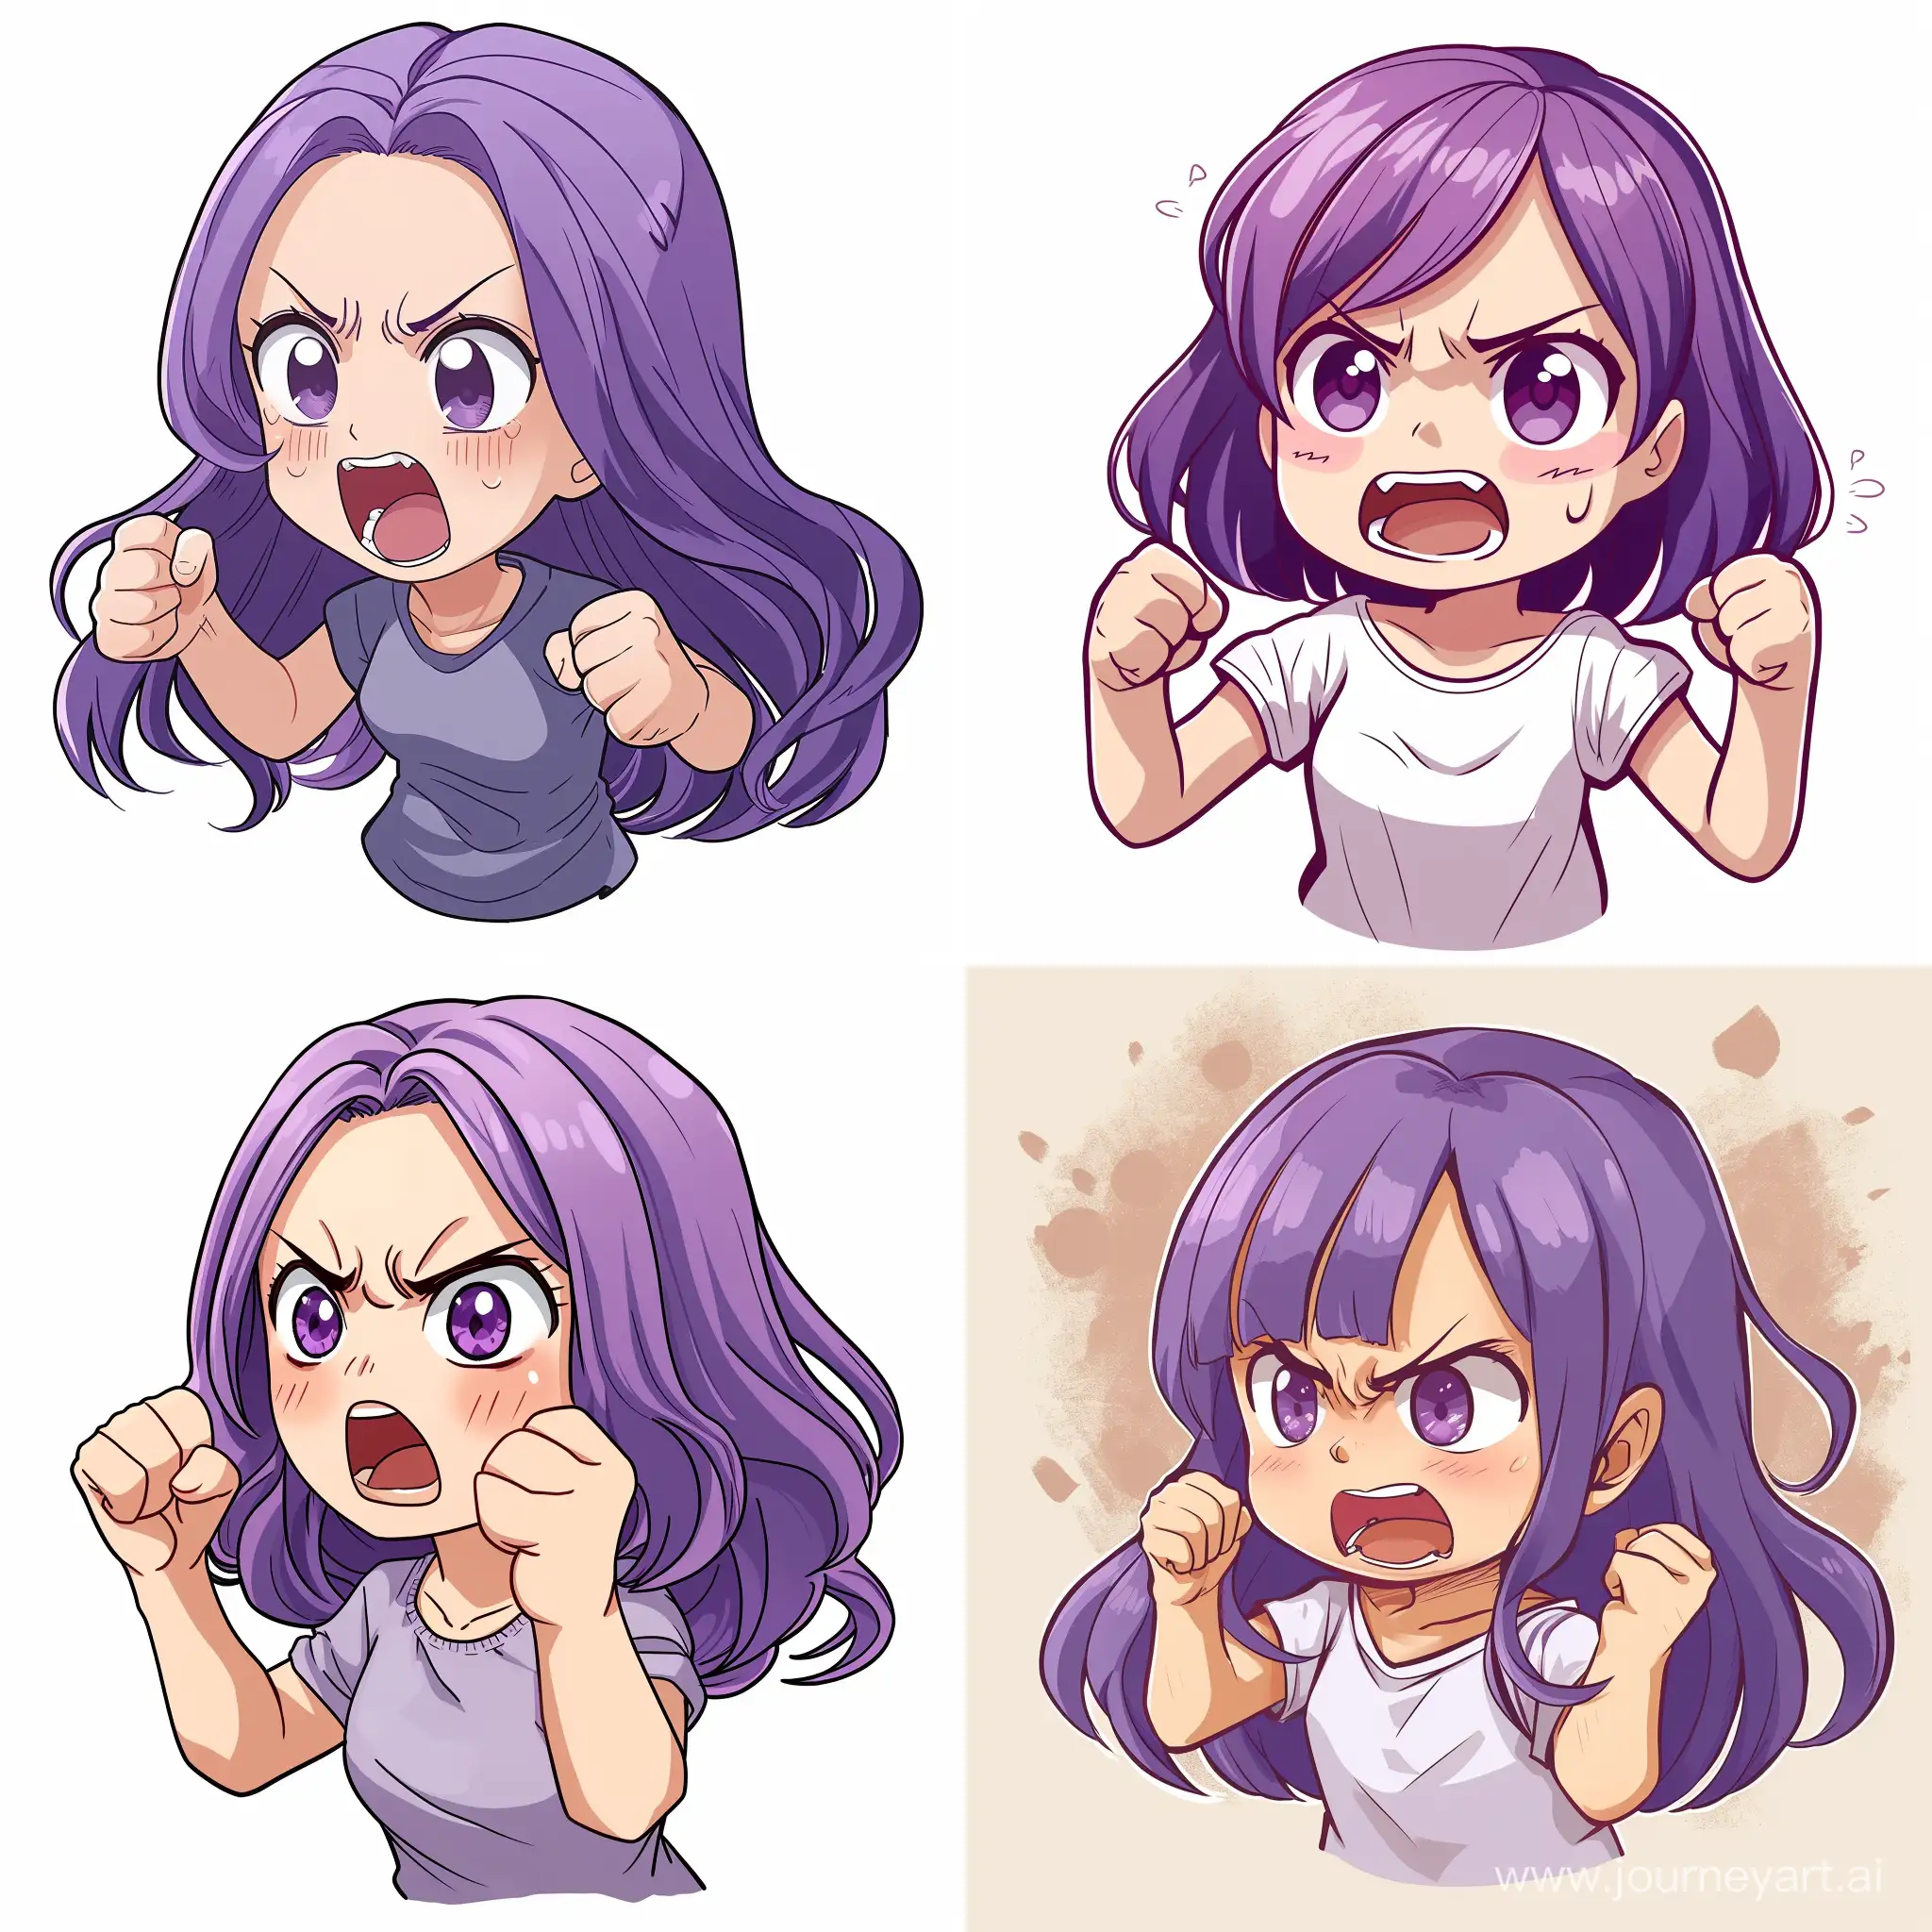 Fierce-Japanese-Anime-Girl-with-Purple-Hair-Shouting